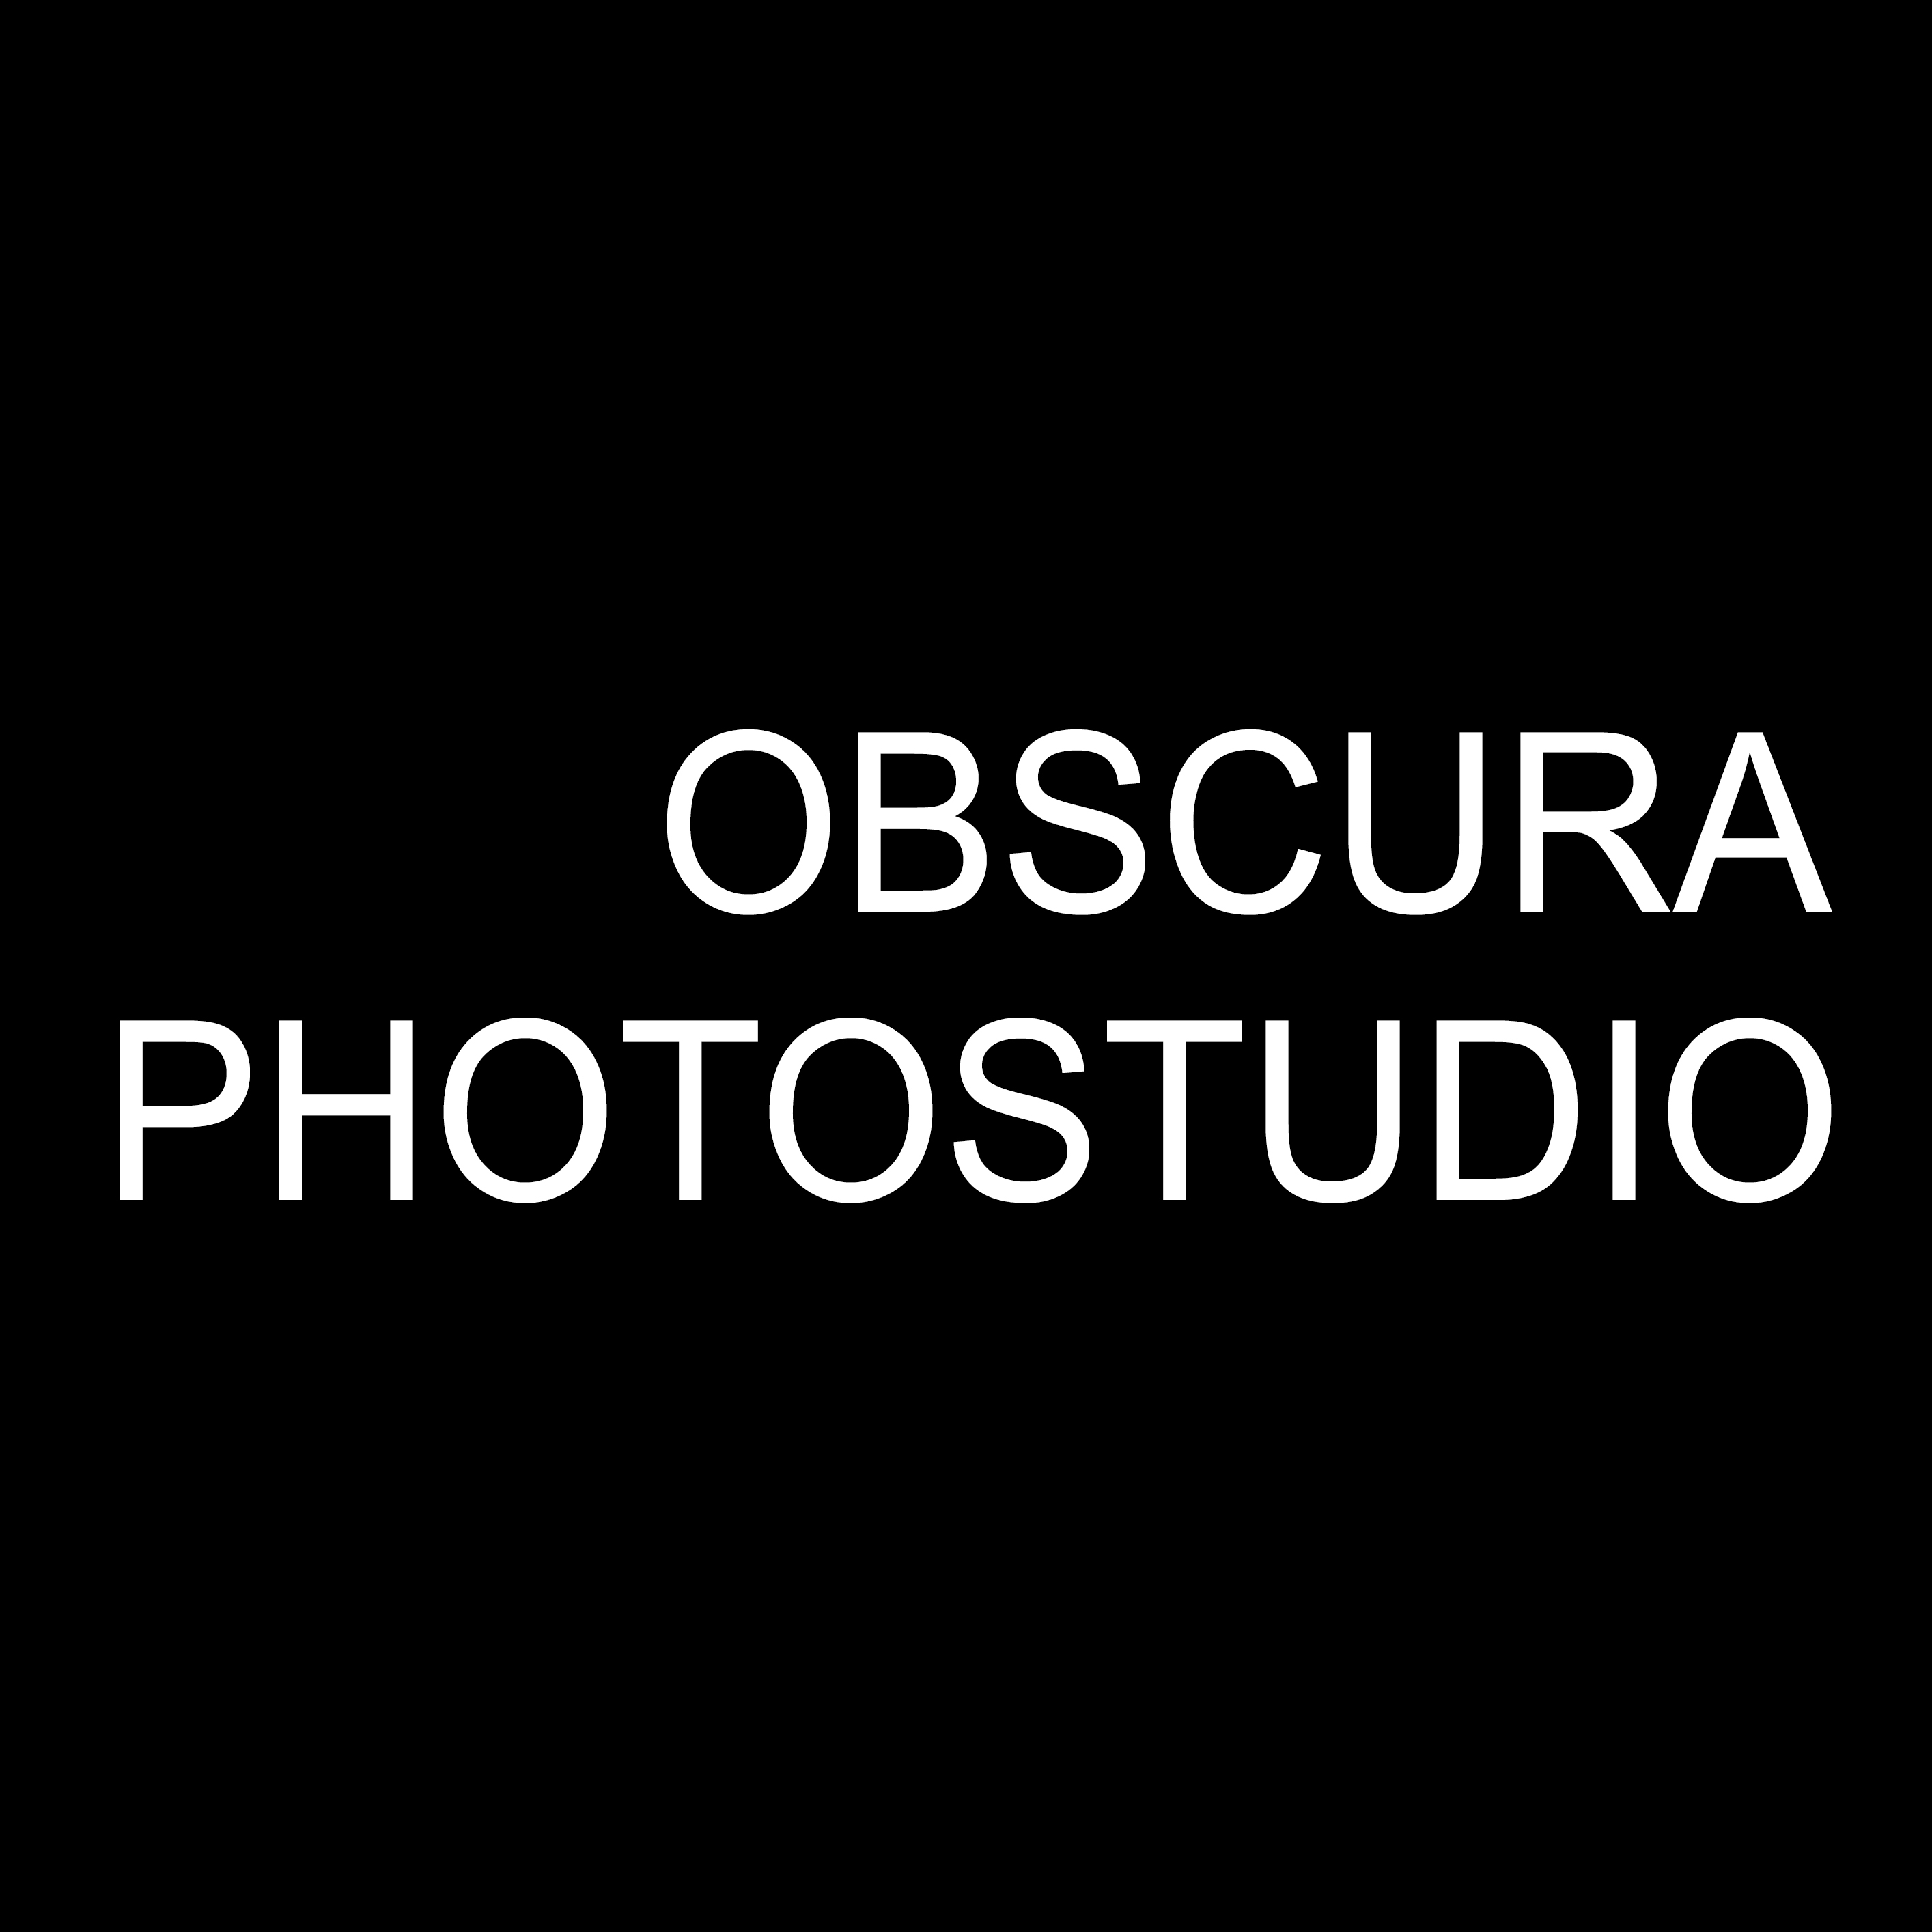 OBSCURA Photostudio